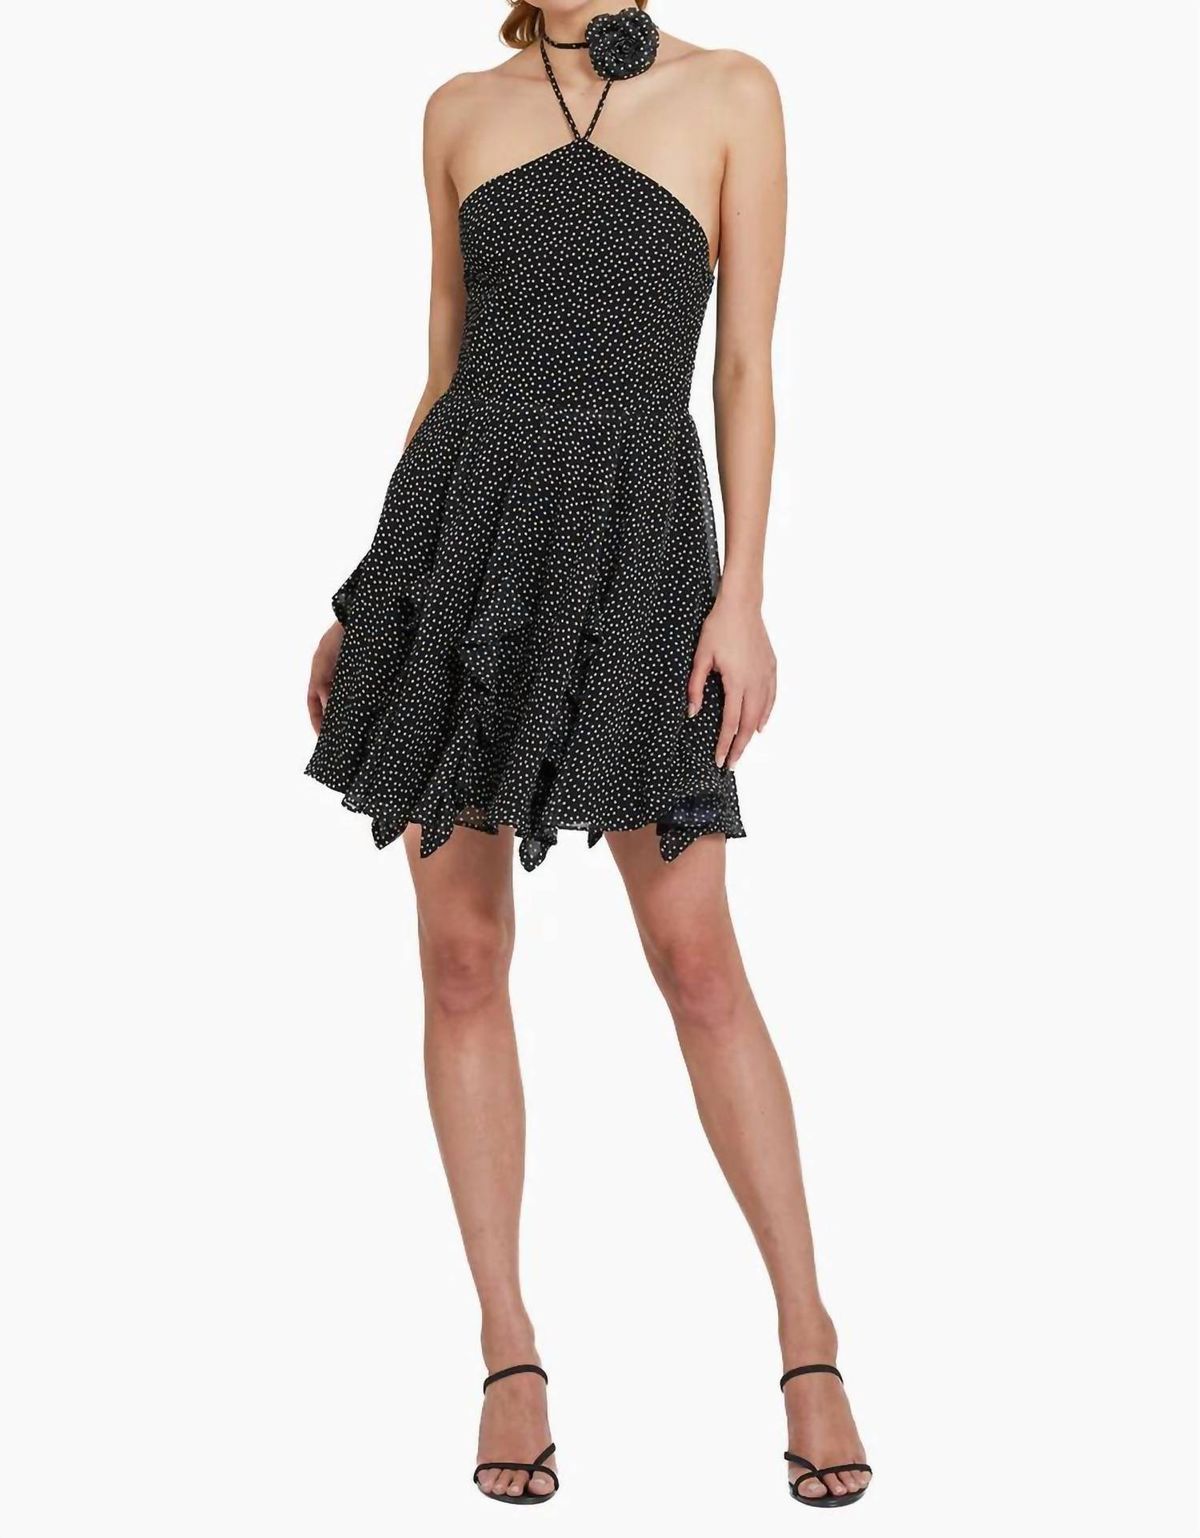 Style 1-708574124-2901 Amanda Uprichard Size M Halter Black Cocktail Dress on Queenly